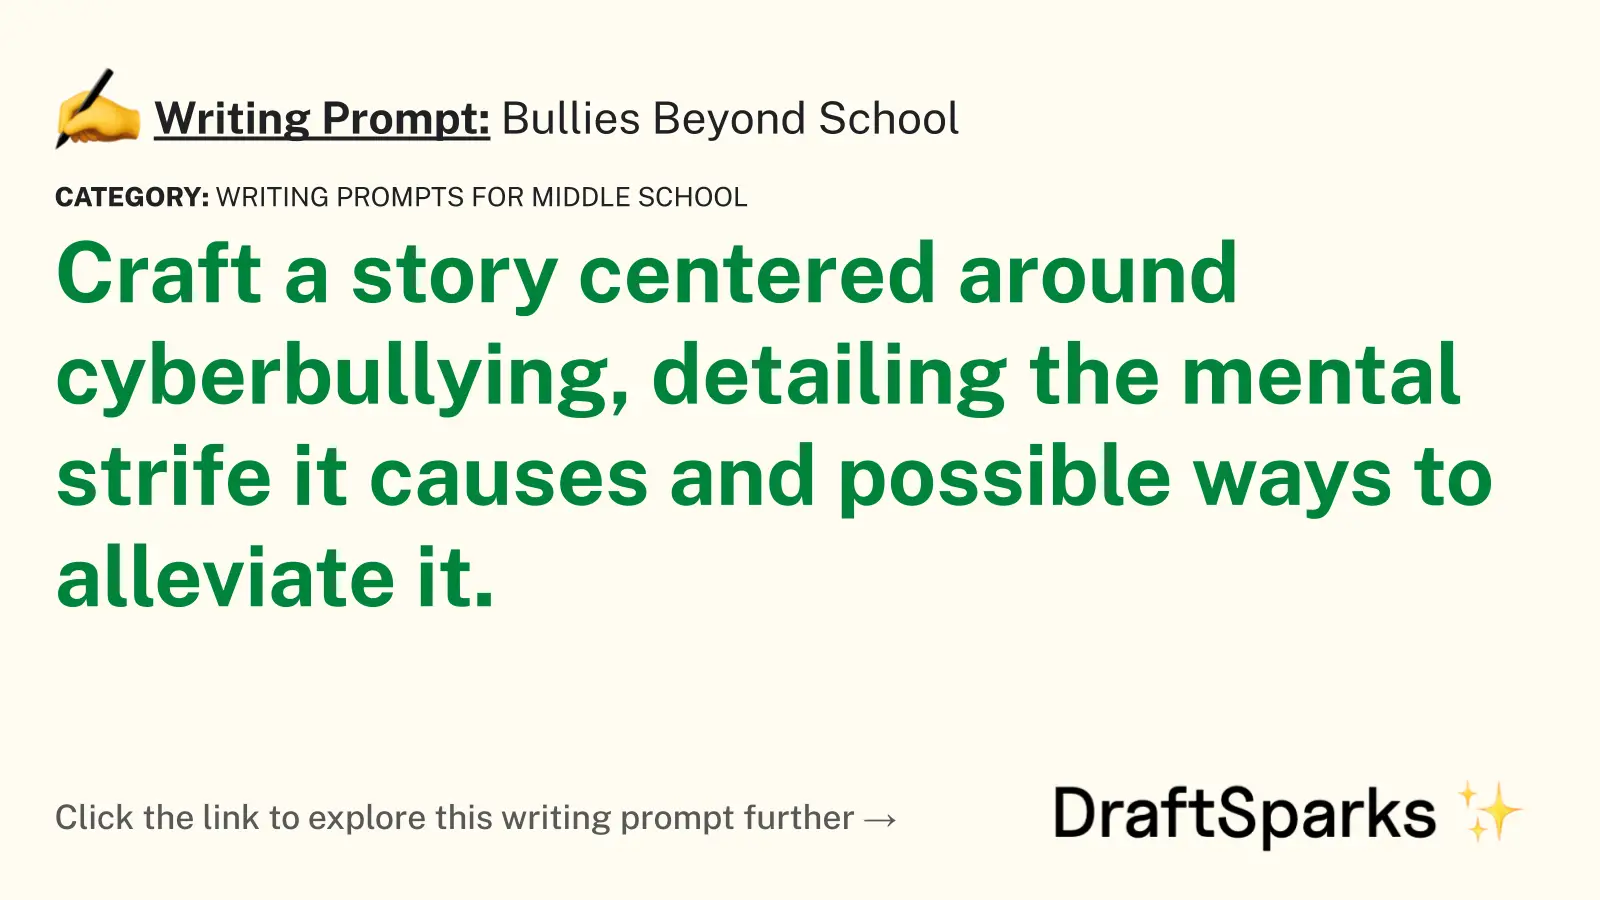 Bullies Beyond School